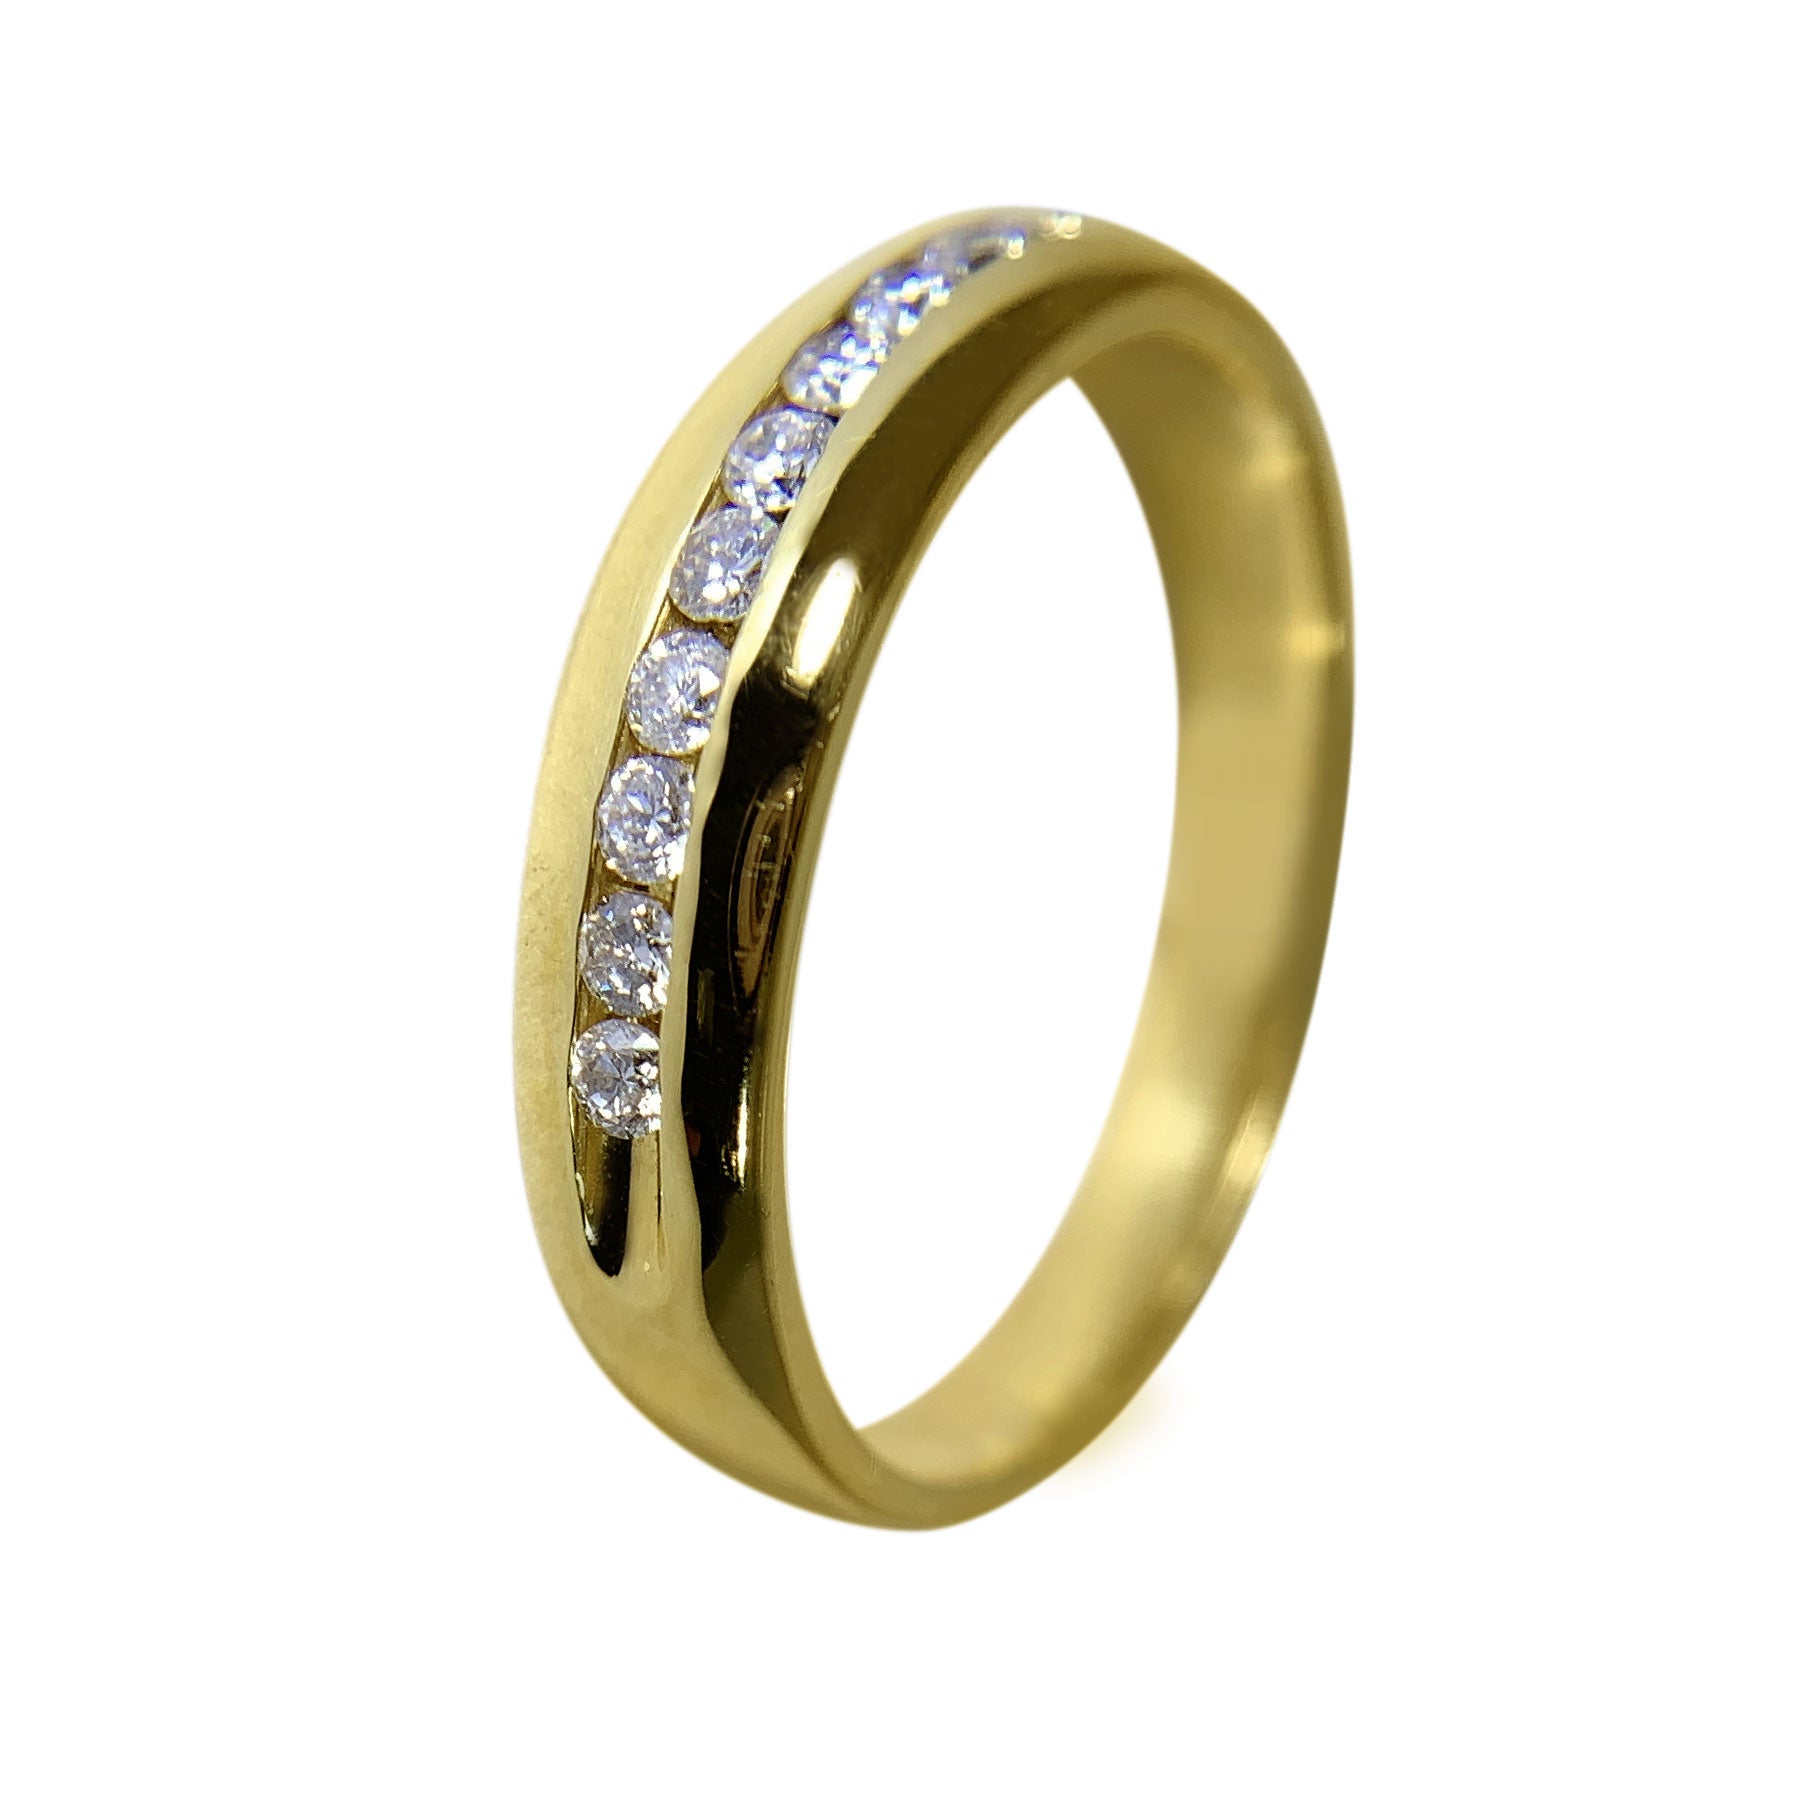 14 KT YELLOW GOLD - WEDDING BAND WITH ROUND DIAMONDS - 0.32 CT